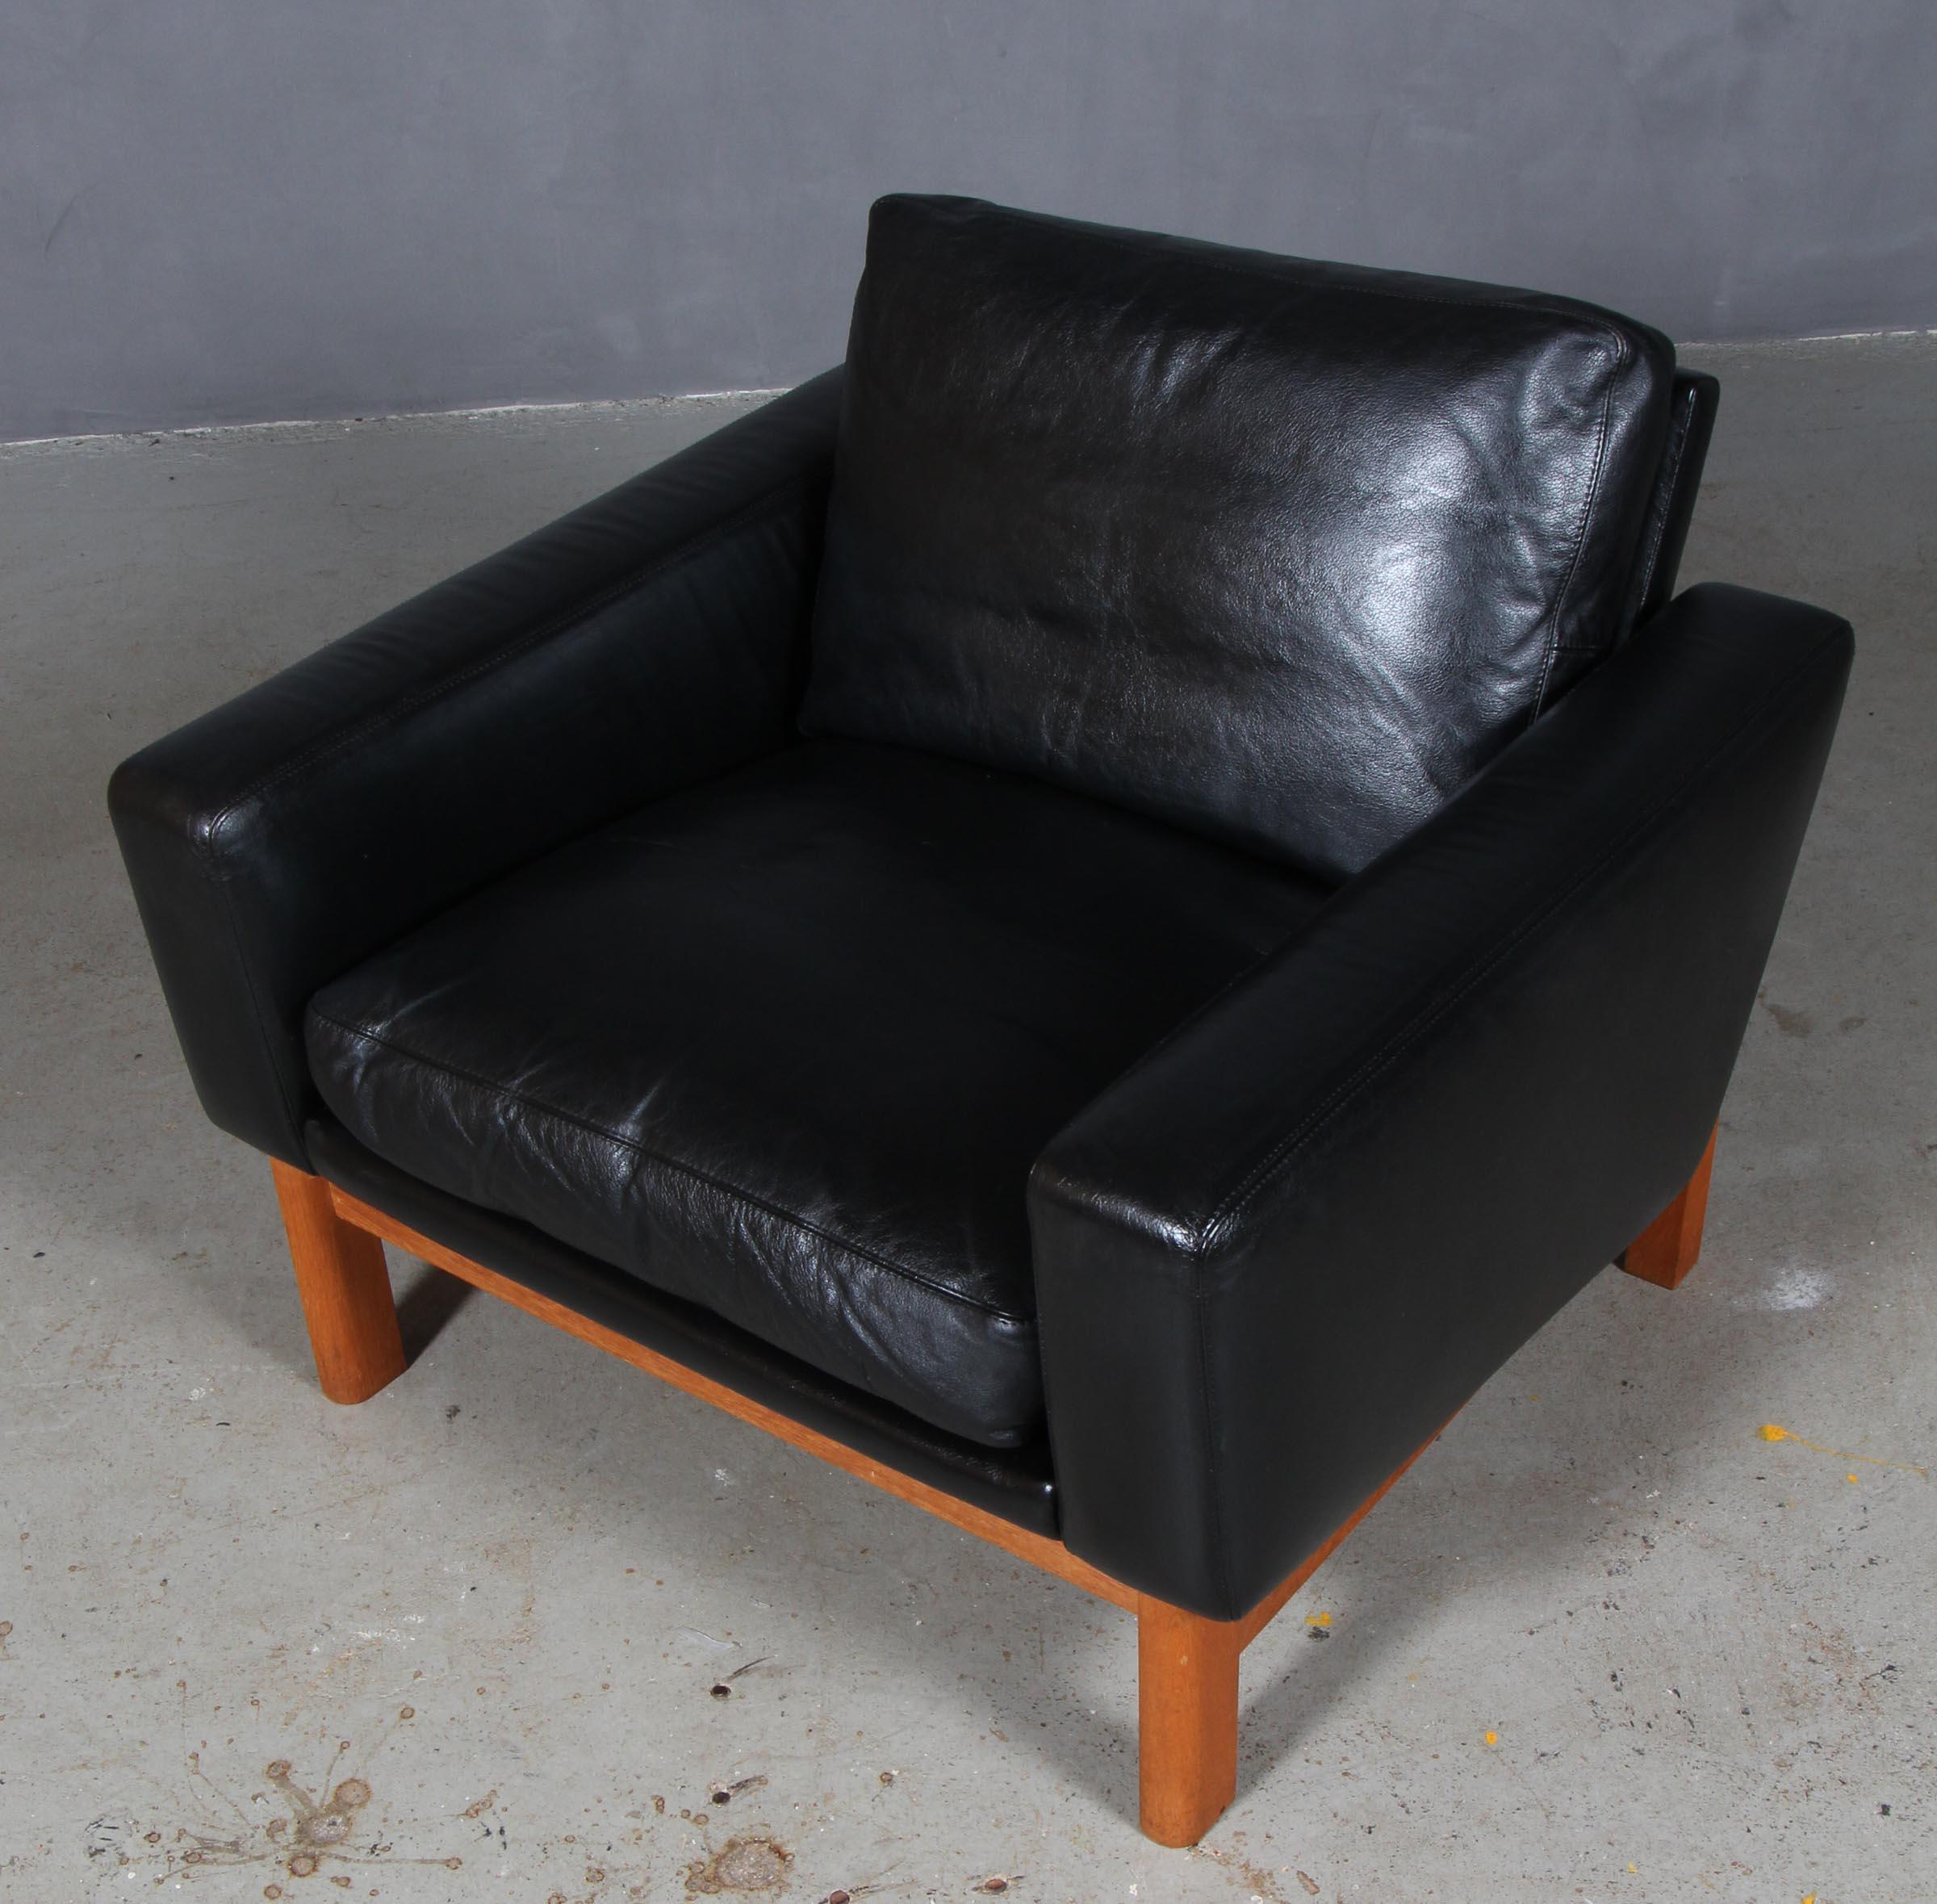 Poul M. Volther lounge chair in original black leather.

Frame of oak

Made by Erik Jørgensen.